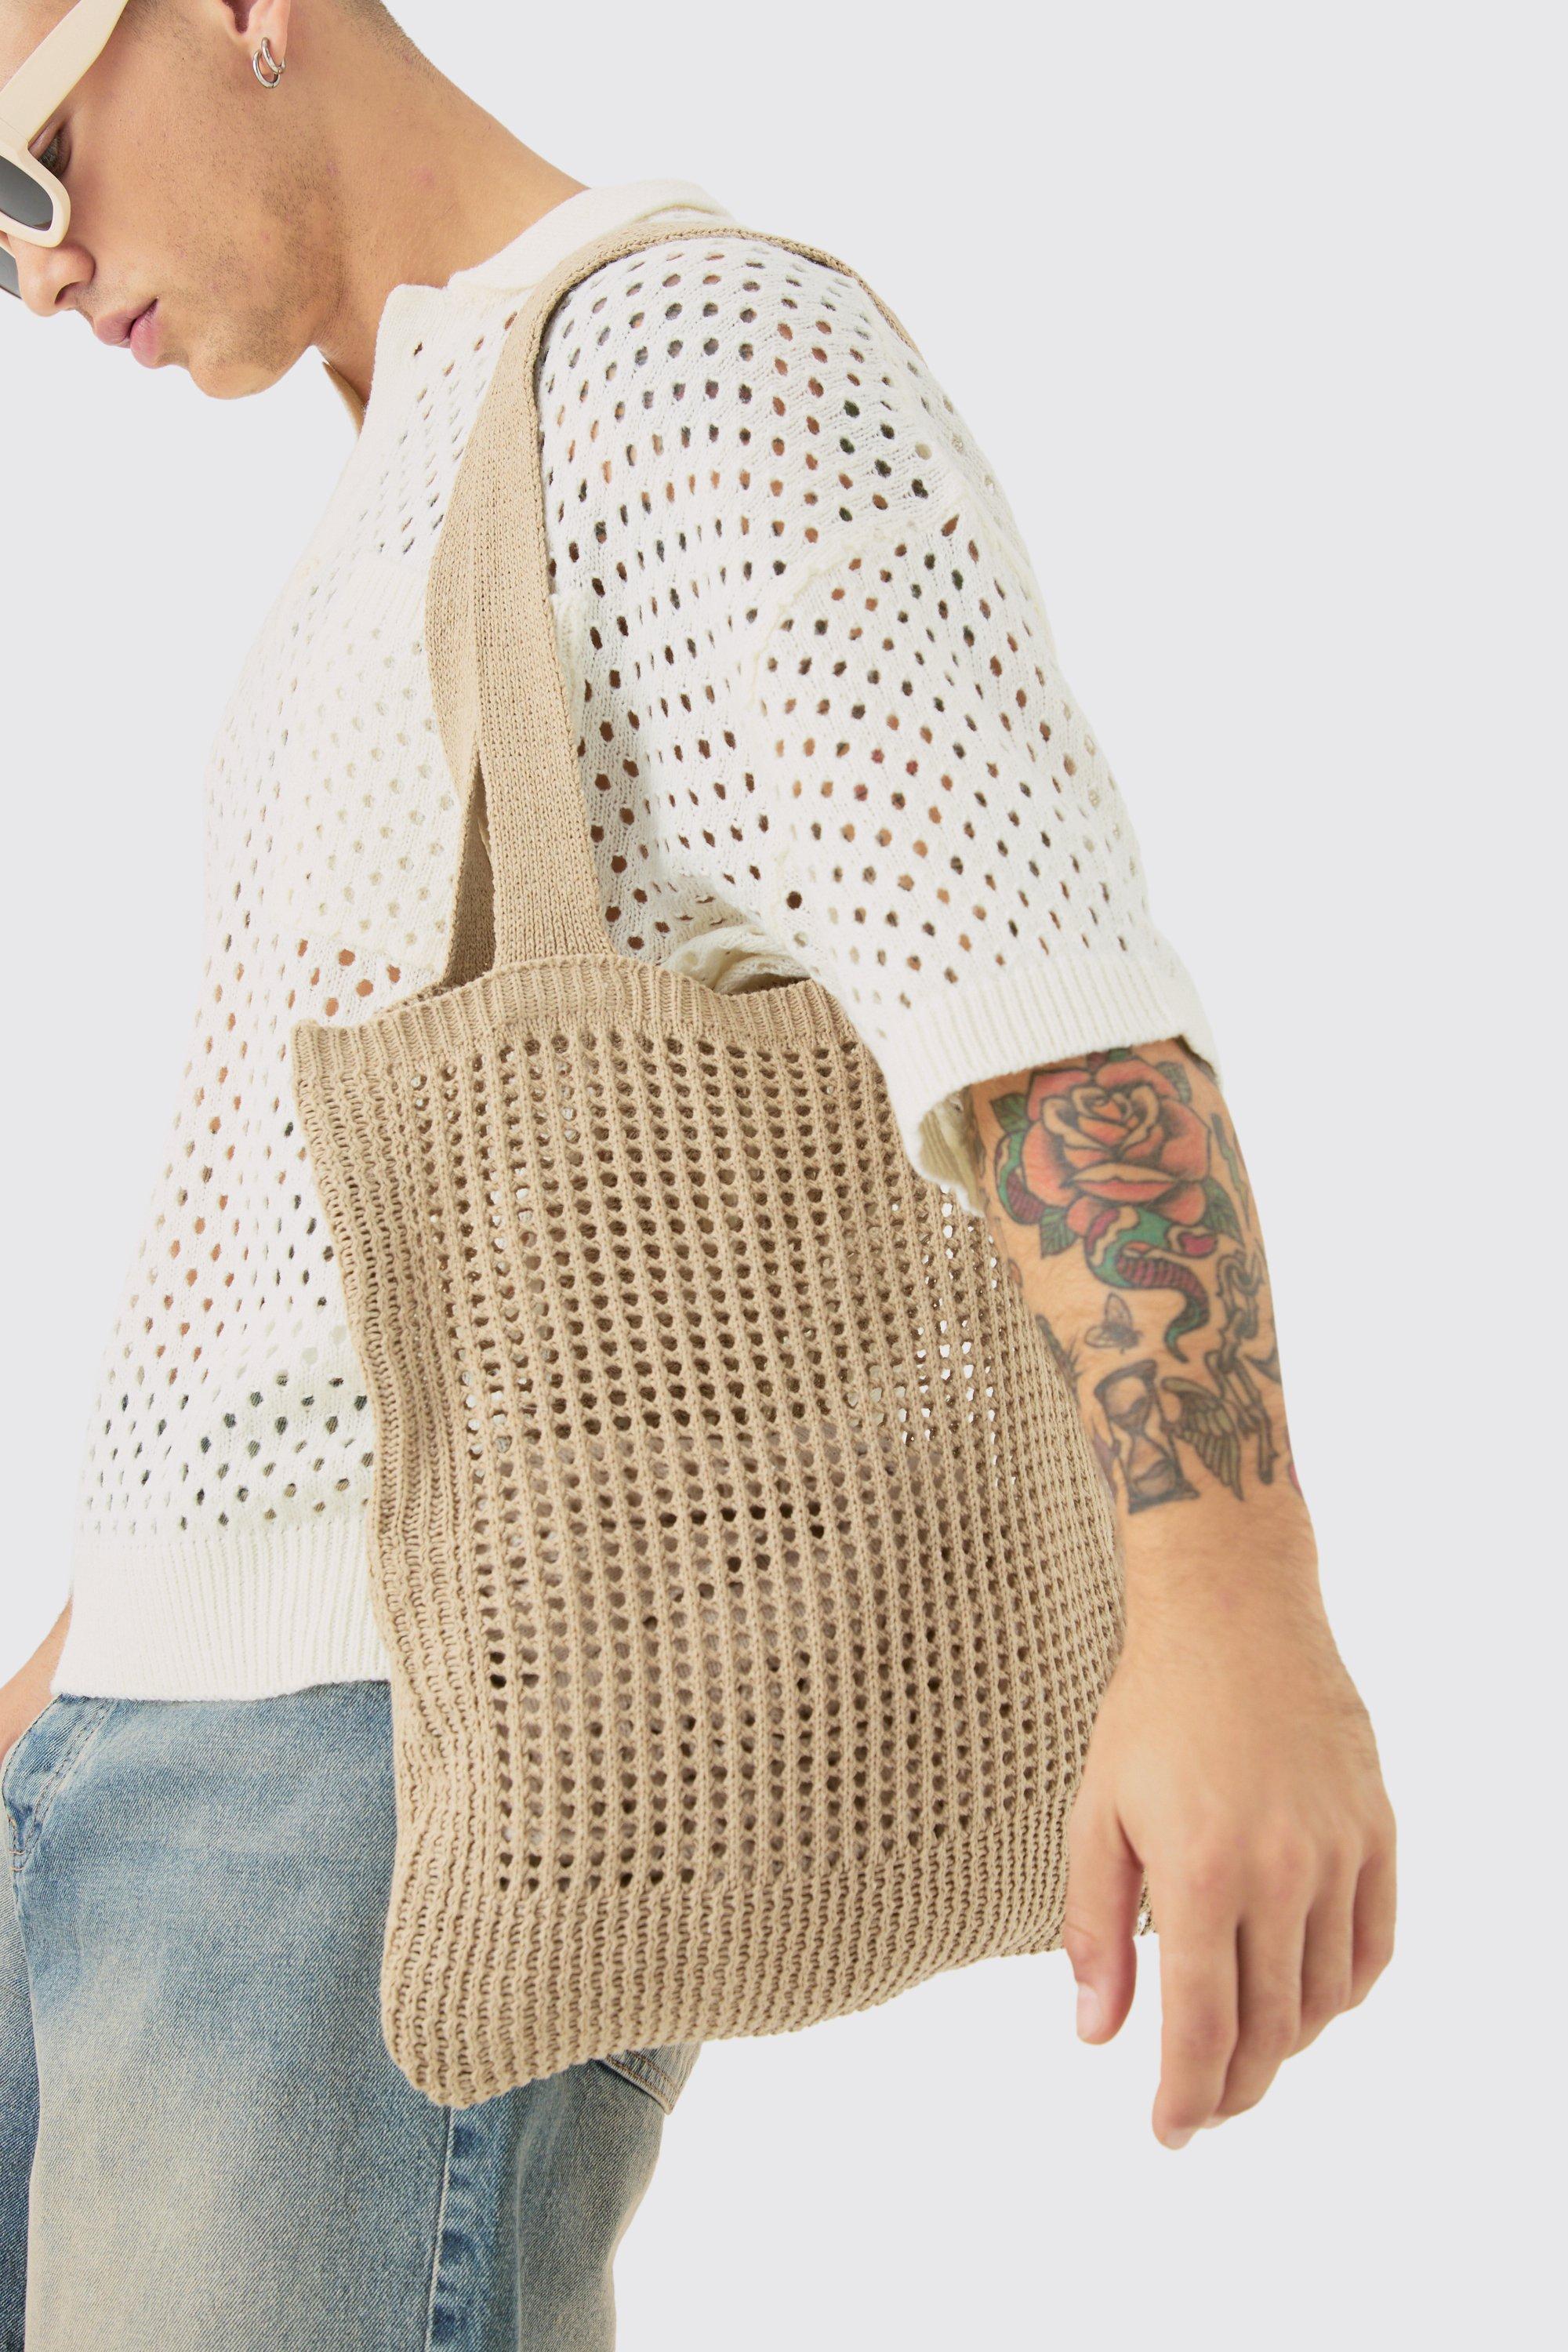 crochet tote bag in stone homme - pierre - one size, pierre